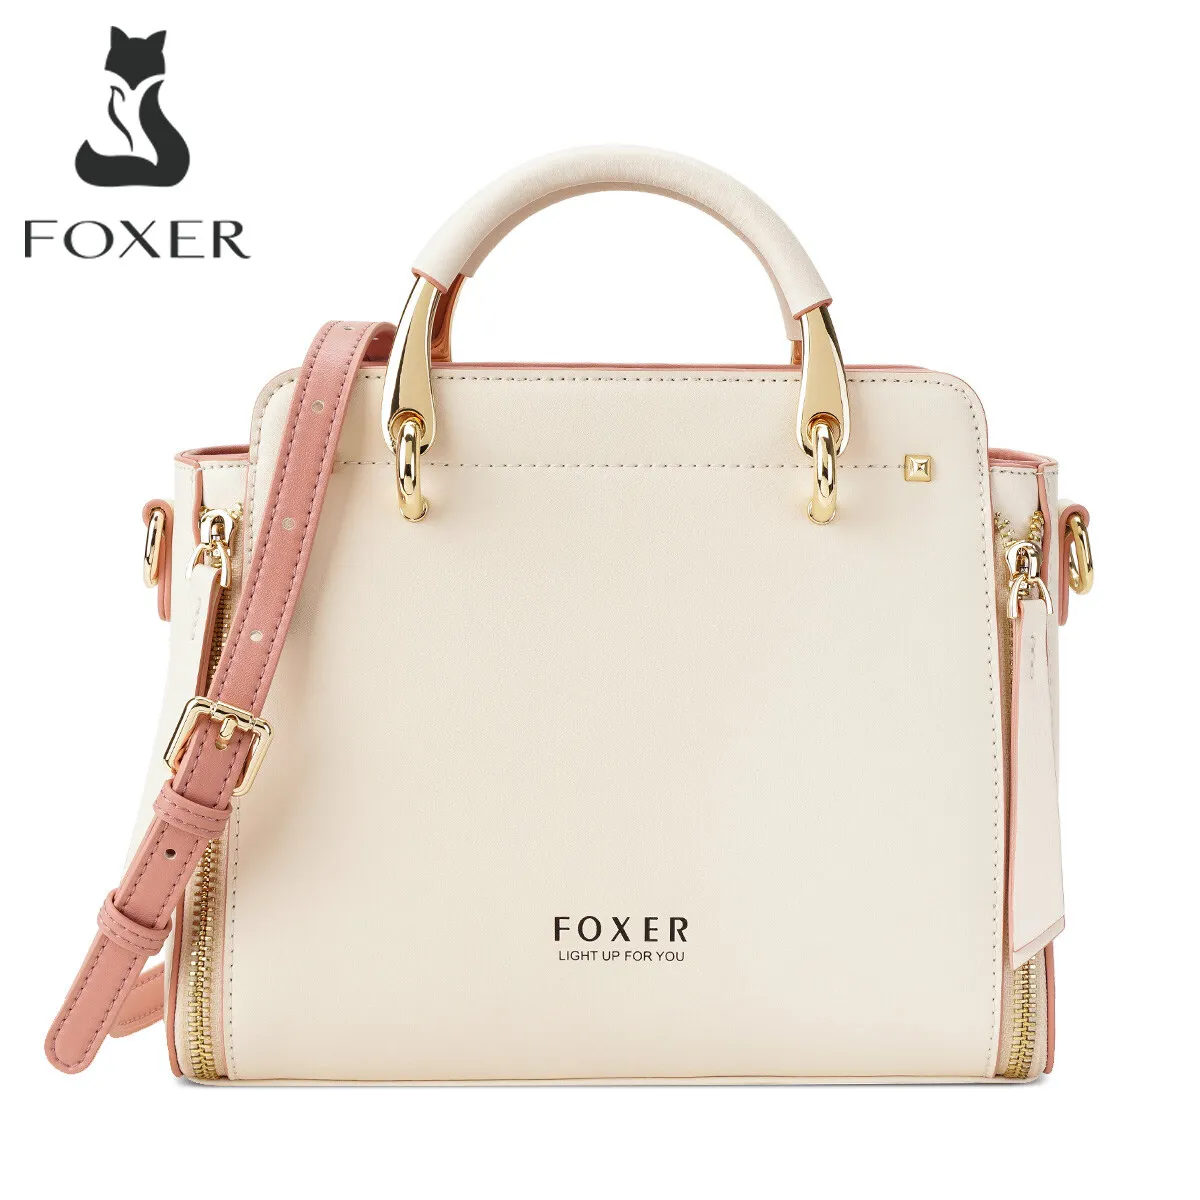 FOXER Women Top Handle Tote Purse Leather Satchel Handbag Shoulder Bag for Ladies